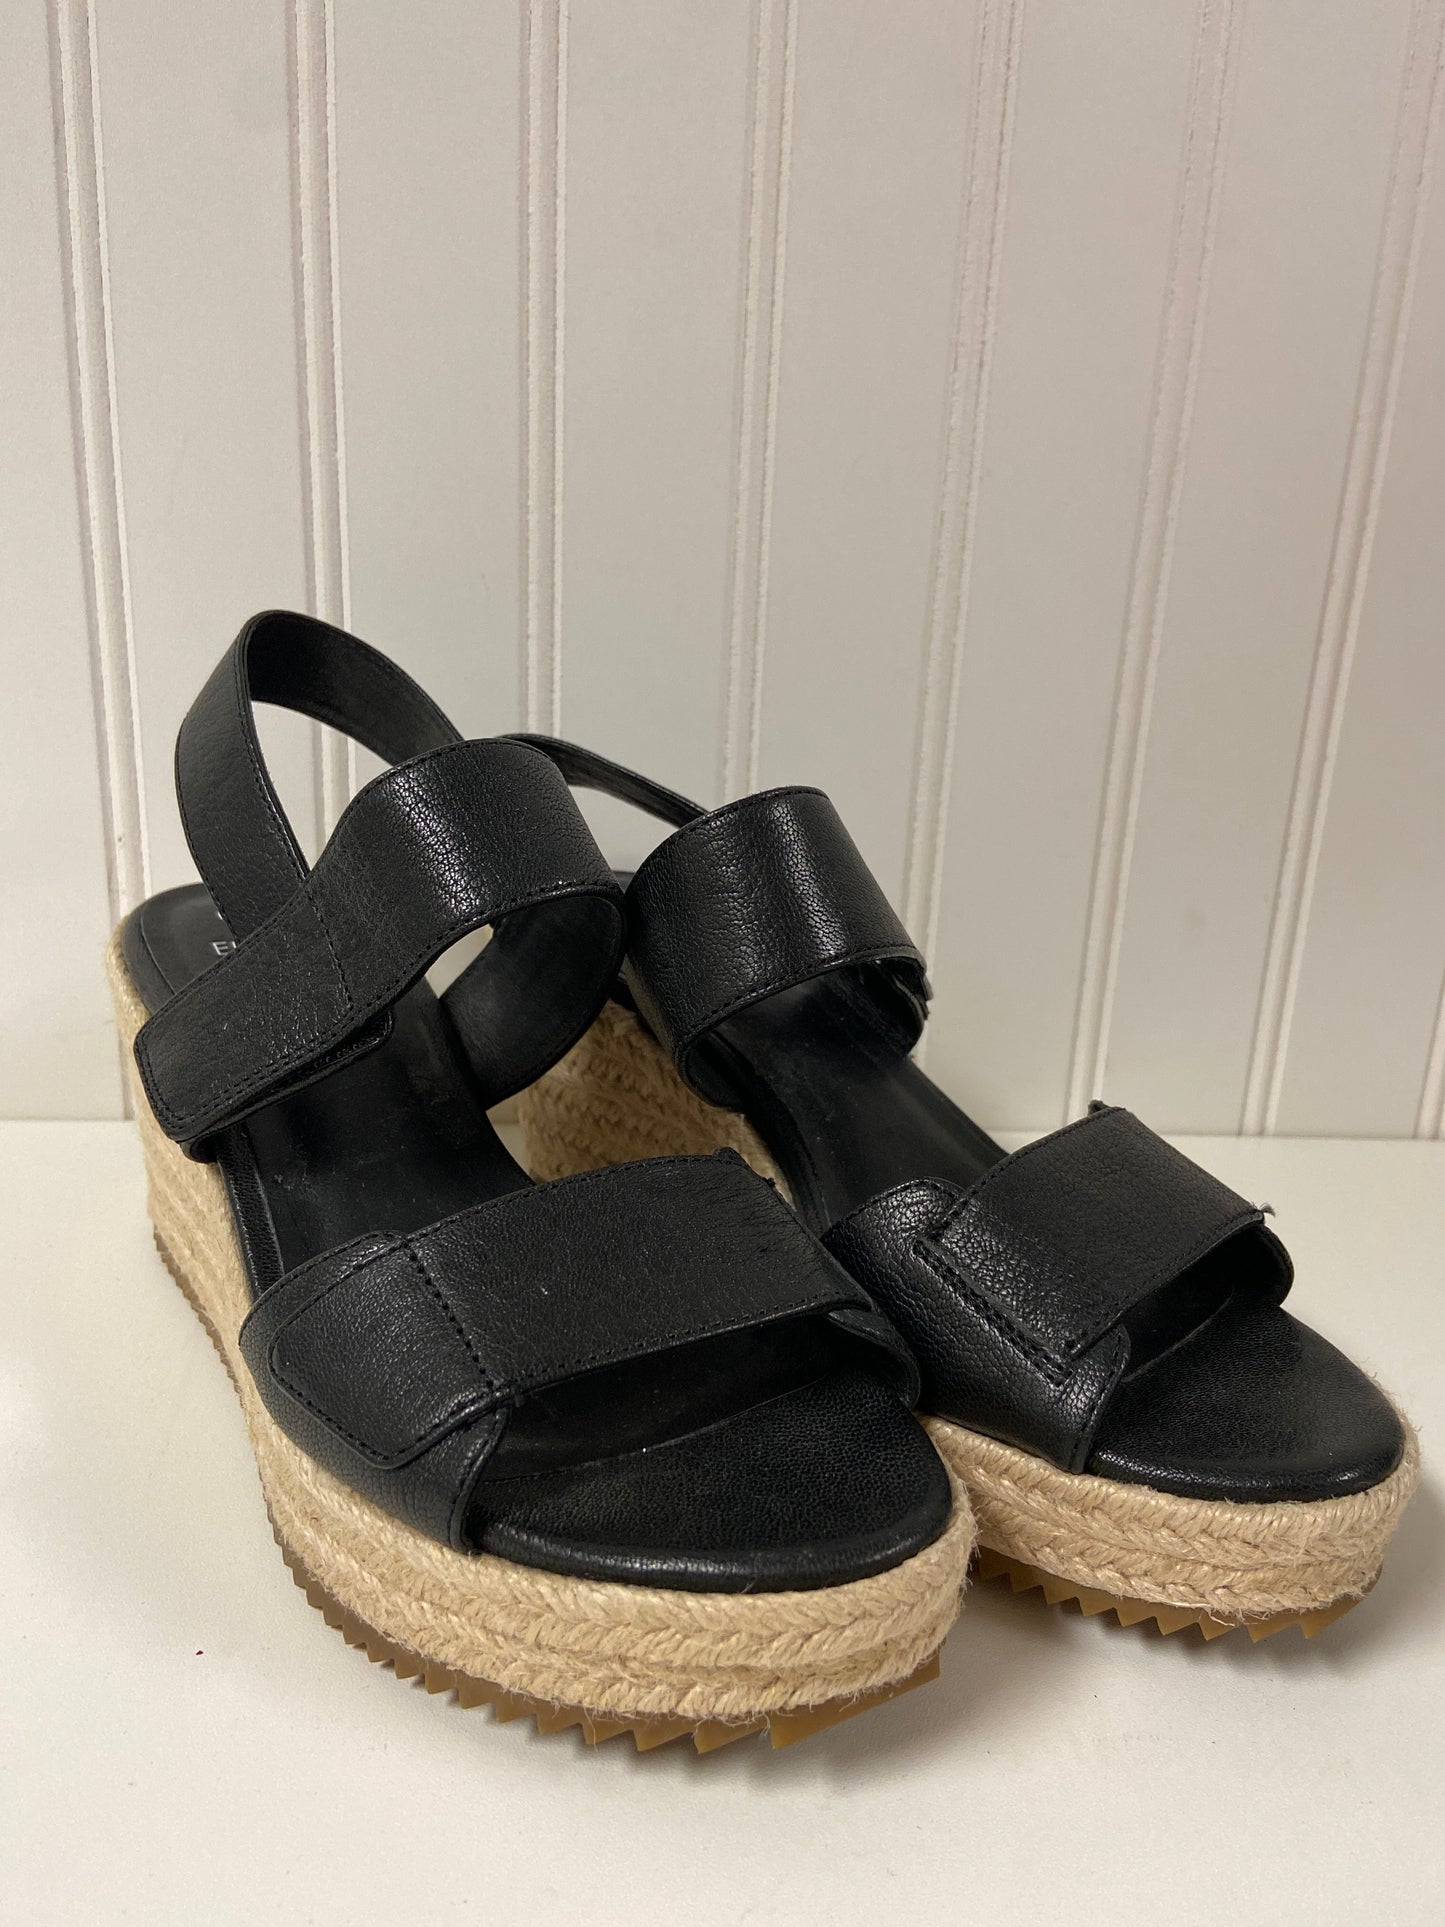 Black Sandals Heels Wedge Eileen Fisher, Size 6